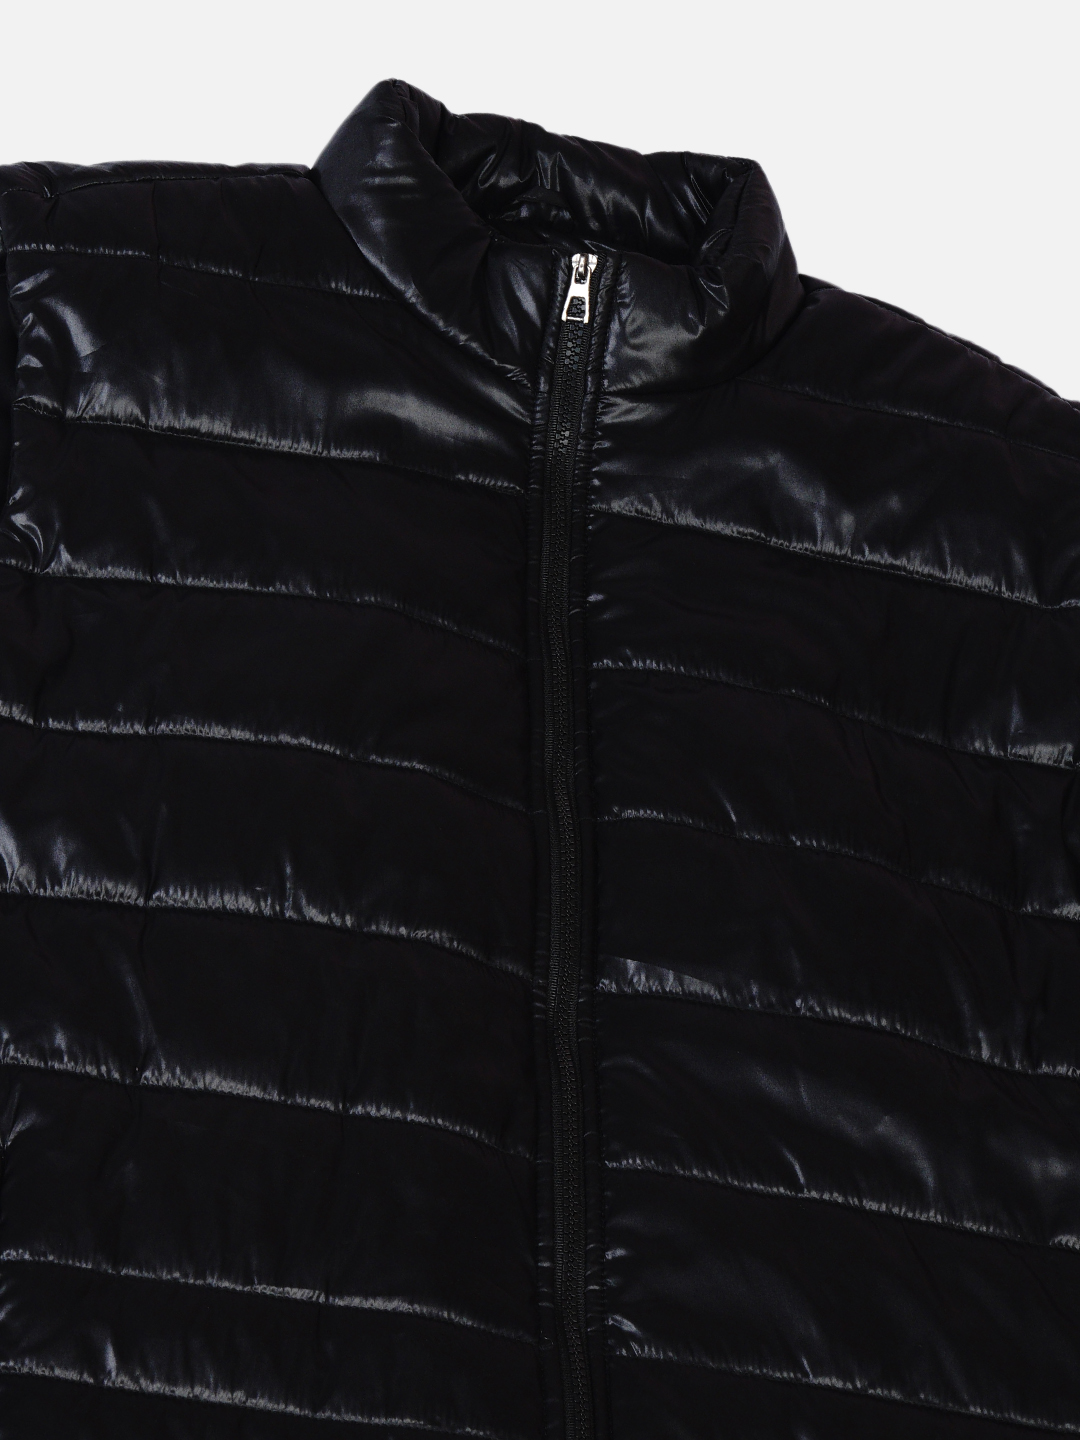 winterwear/jackets/JPJKT73007/jpjkt73007-2.jpg